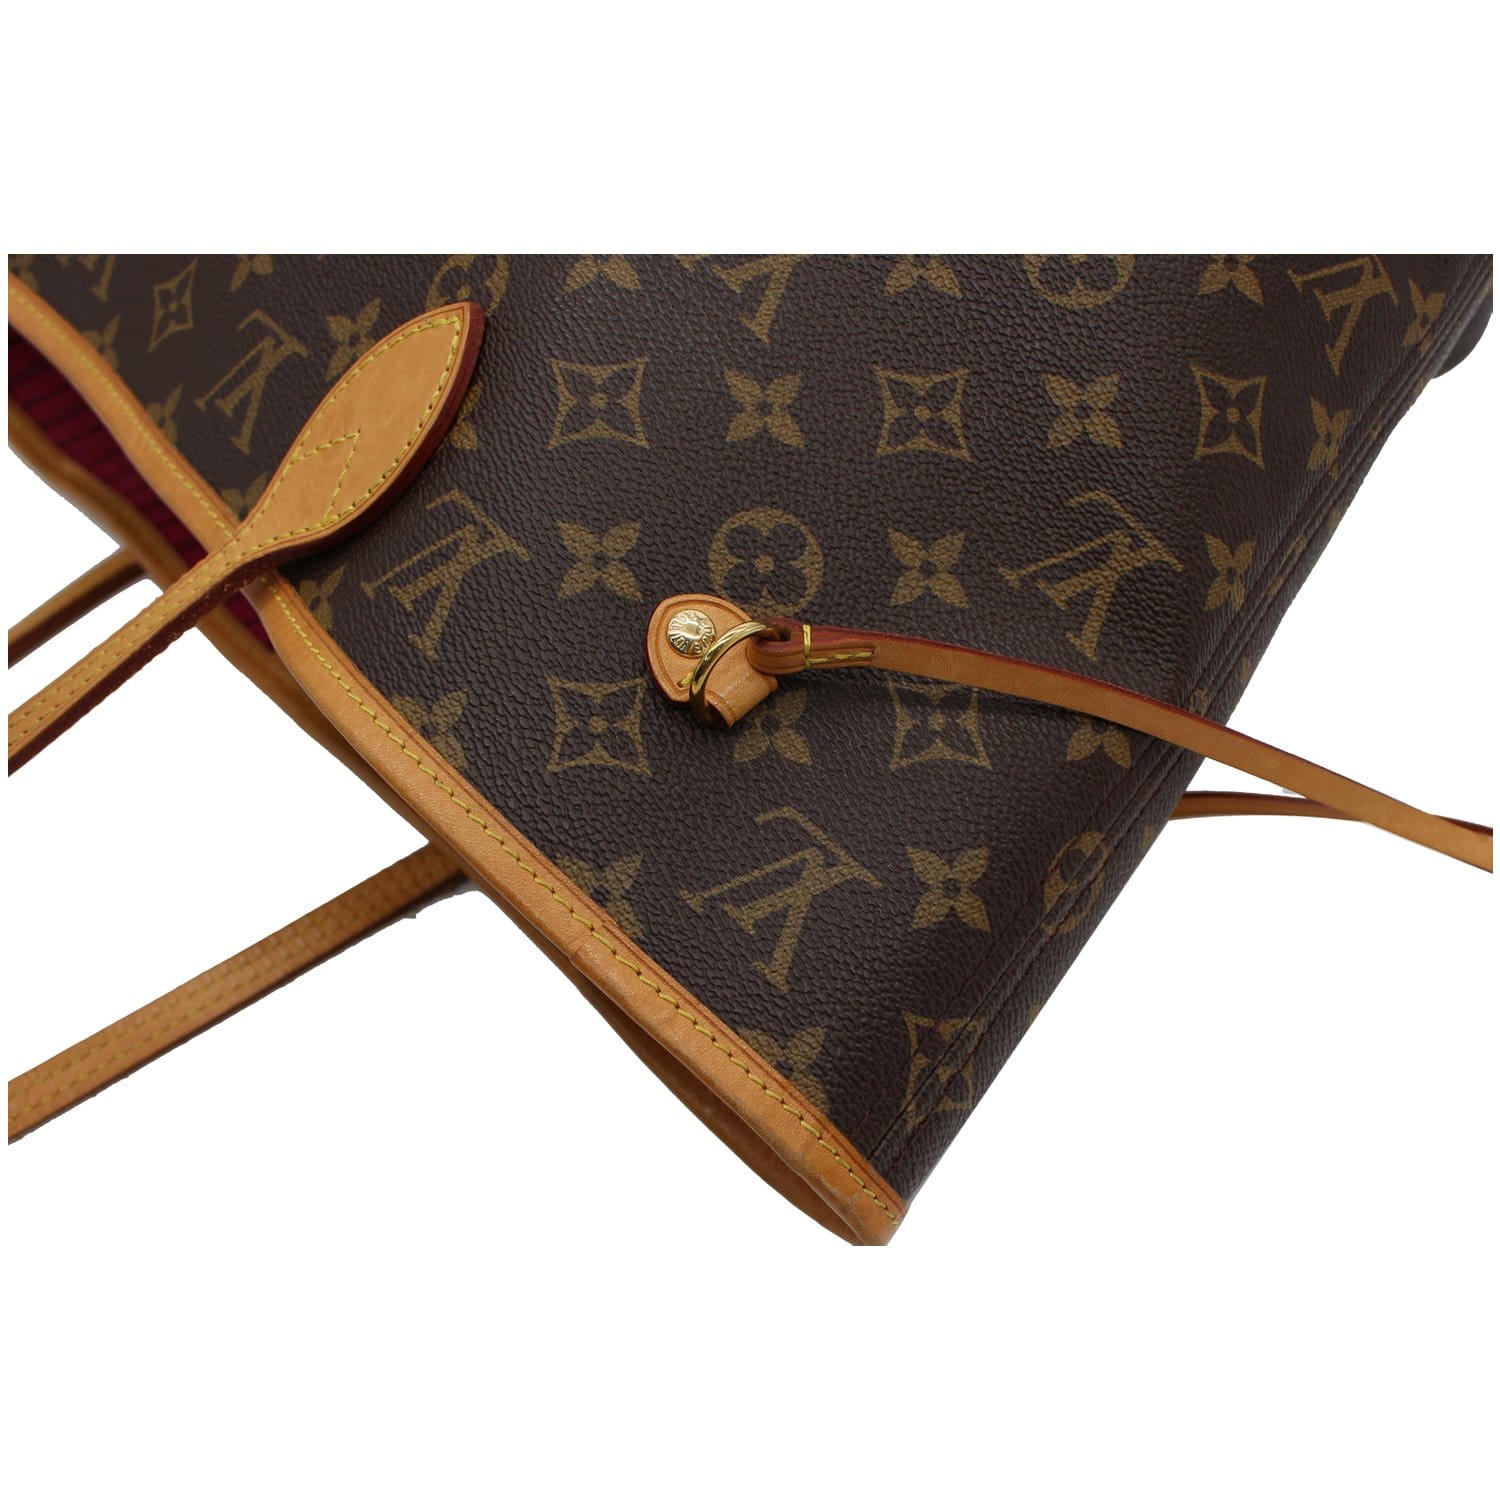 Louis Vuitton Neverfull Bag Price List - Brands Blogger